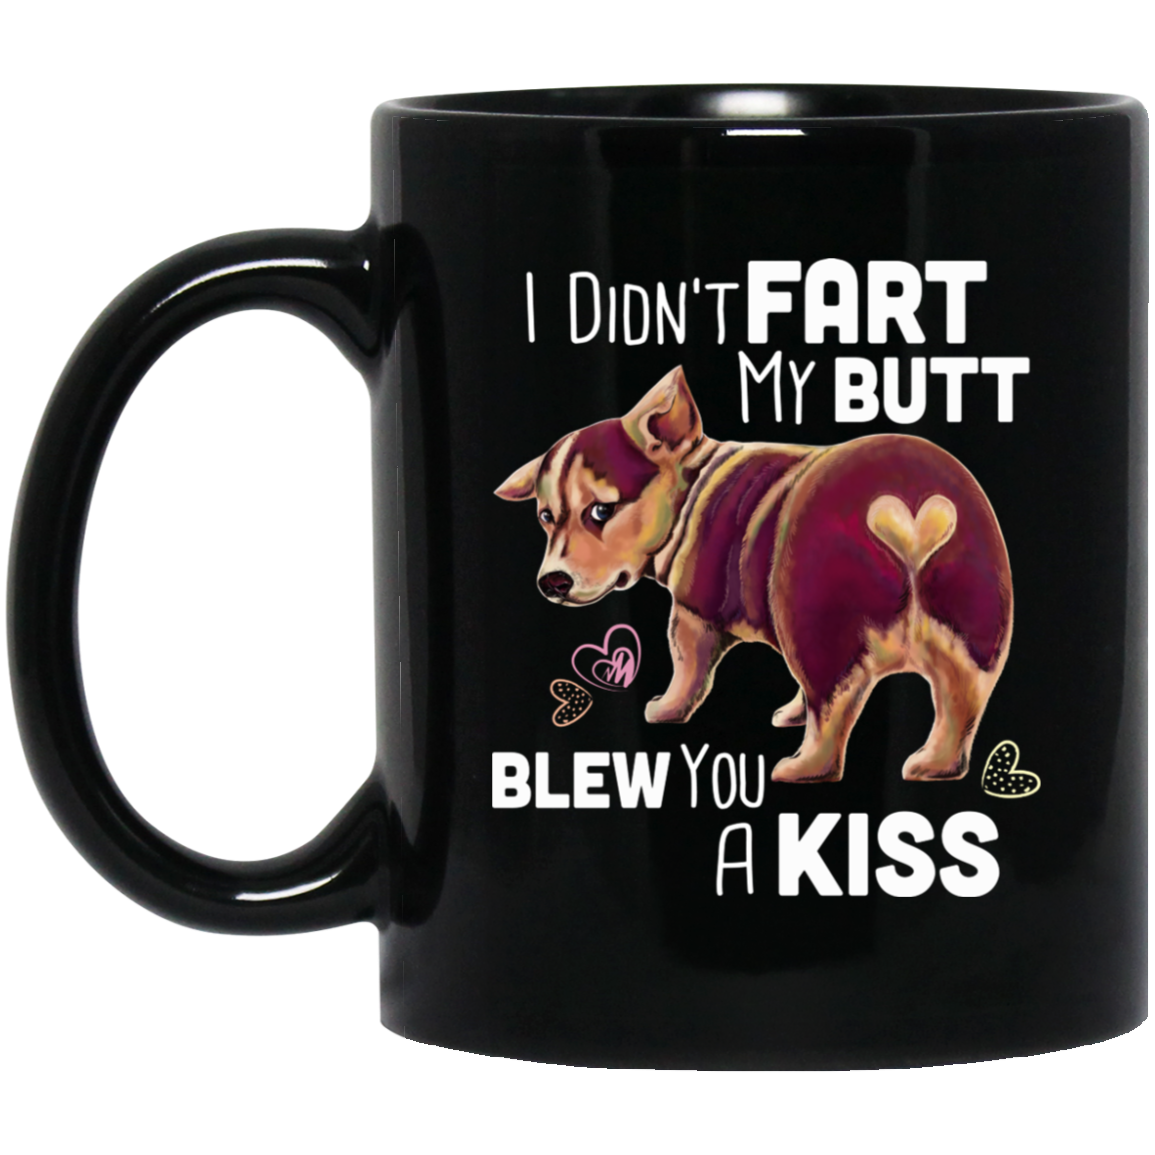 Corgi gifts, Corgi Butt Coffee Mug - I Didn't Fart My Butt Blew You A Kiss - GoneBold.gift